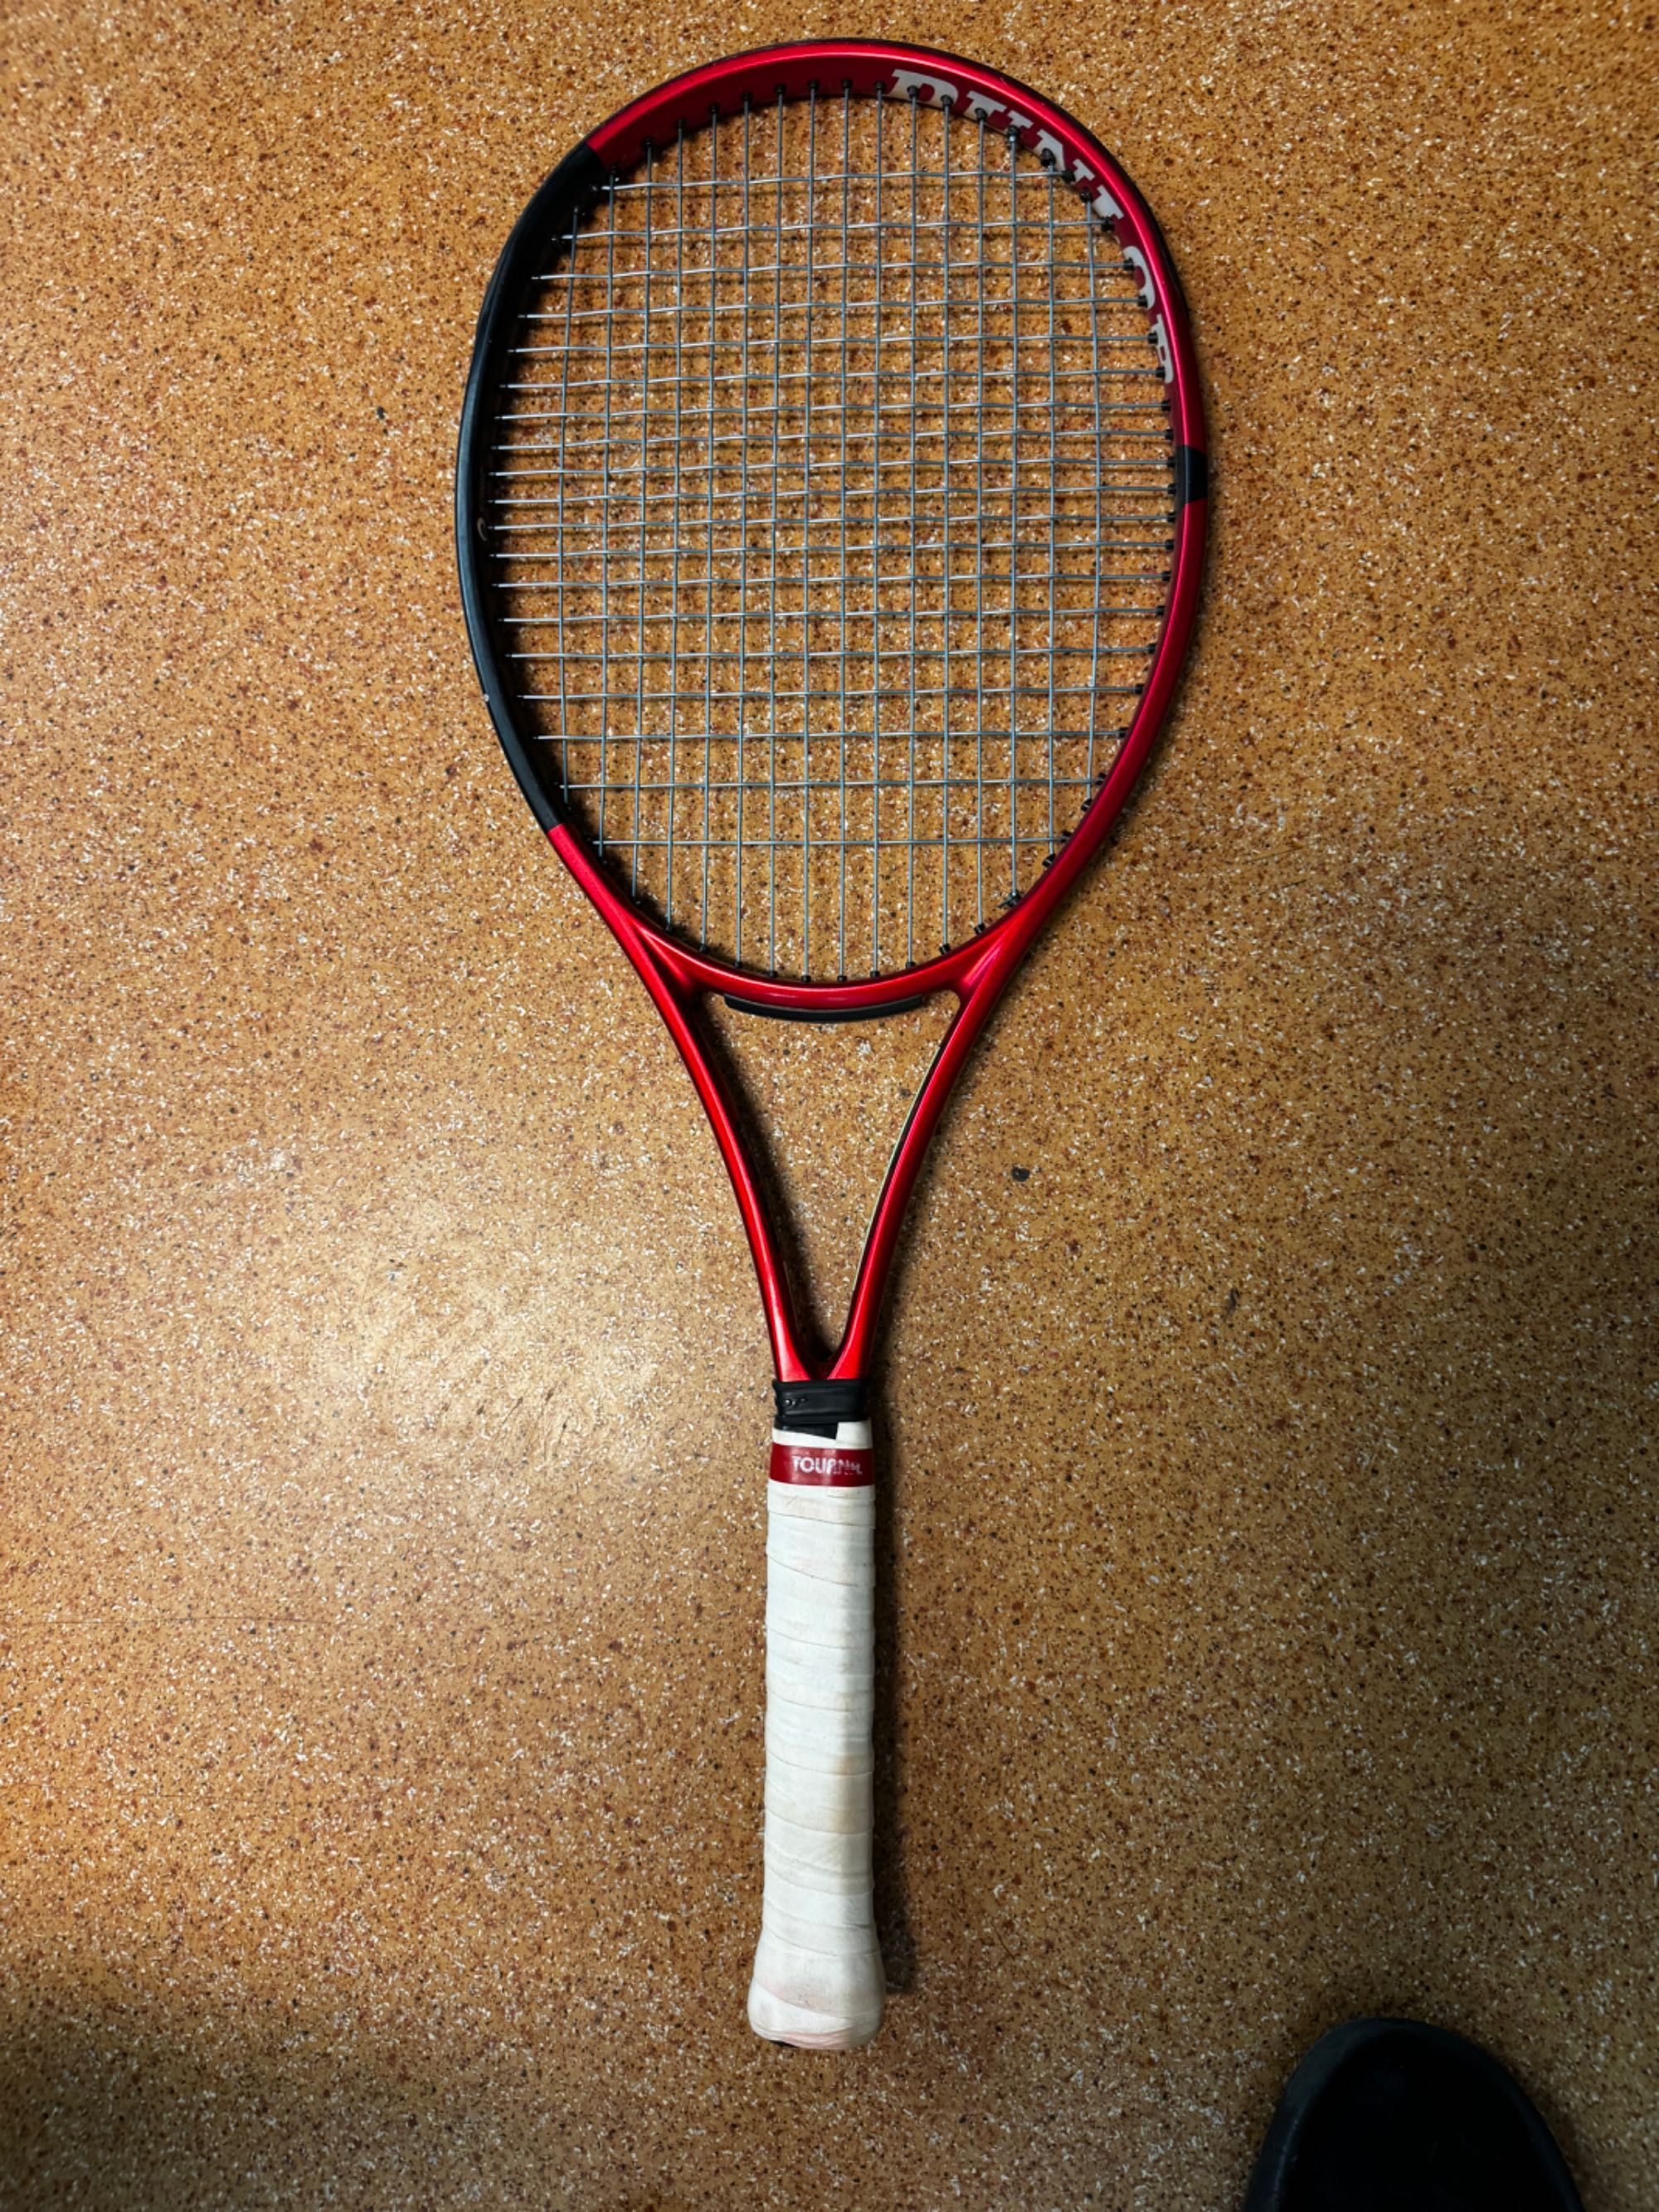 Rakieta do tenisa ziemnego Dunlop CX200 waga 305g